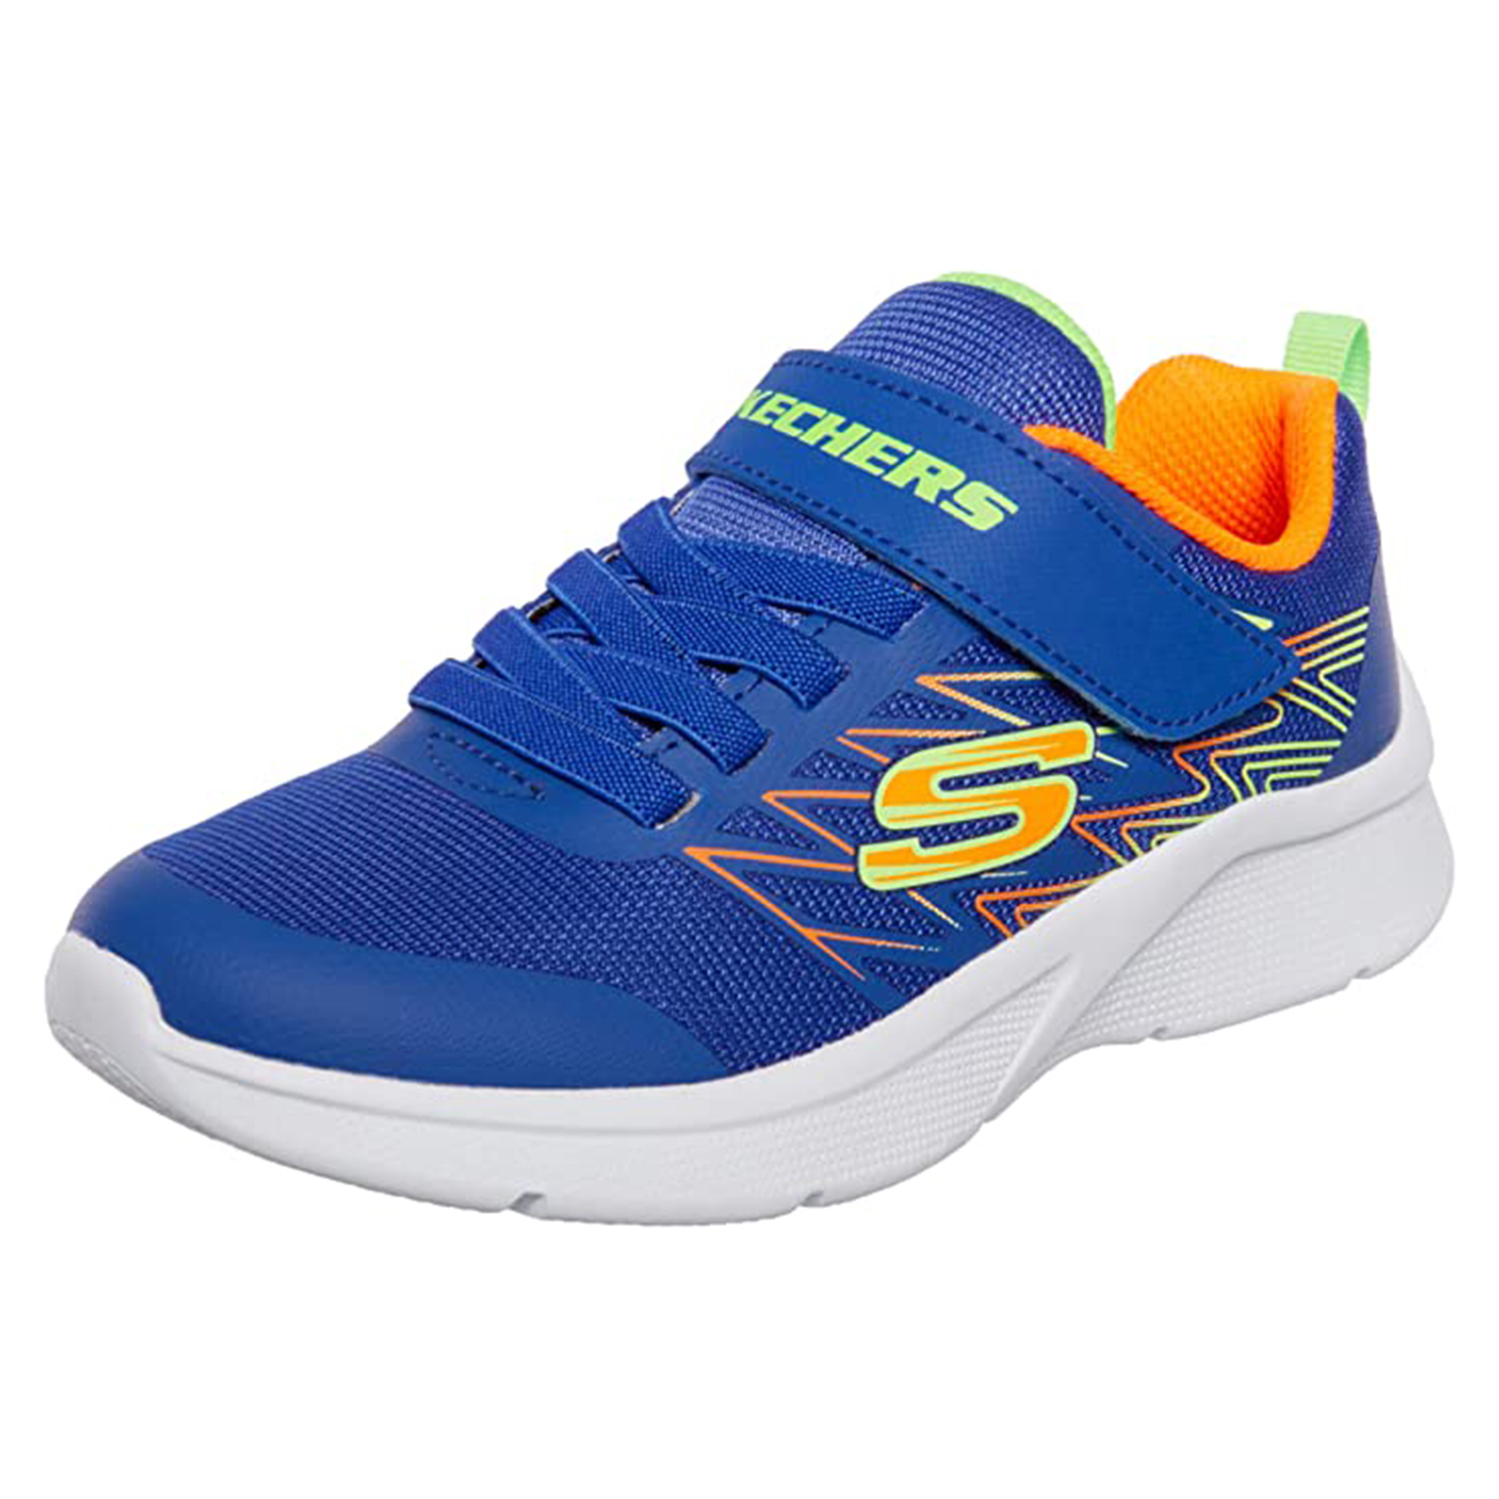 Skechers MICROSPEC TEXLOR Sneakers Kids Blau/orange, Schuhgröße:27 EU